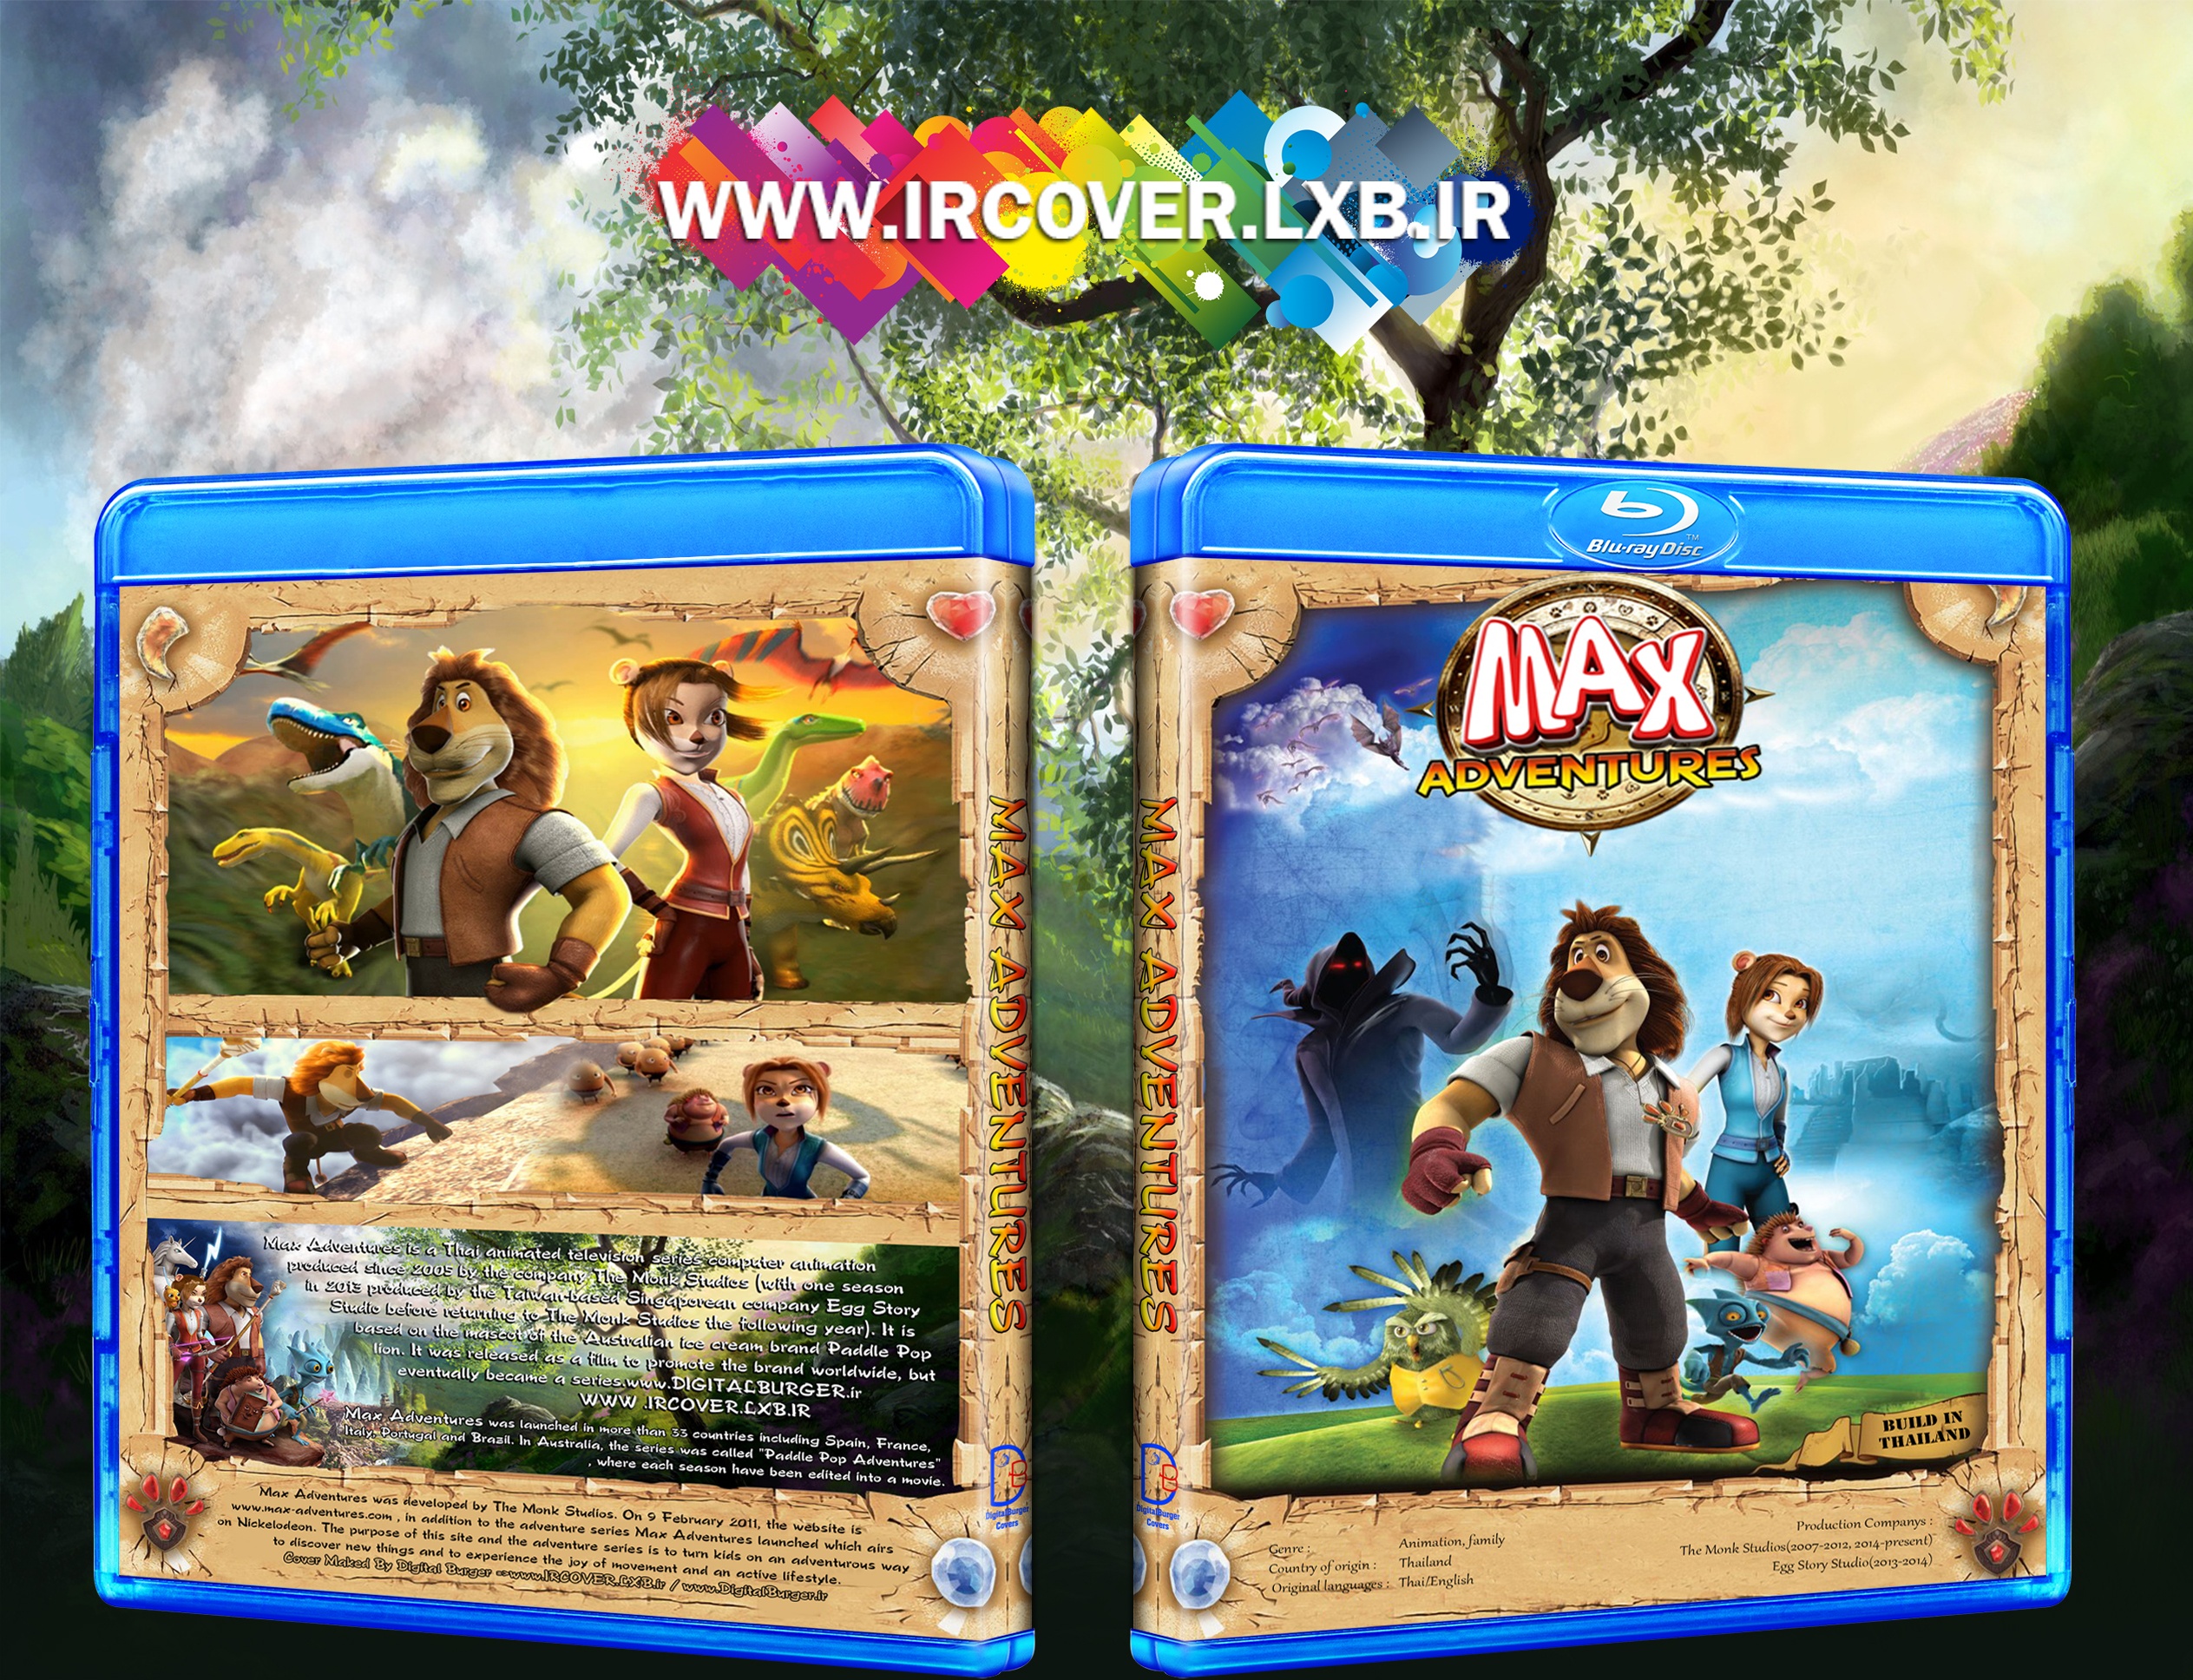 Max Adventures box cover